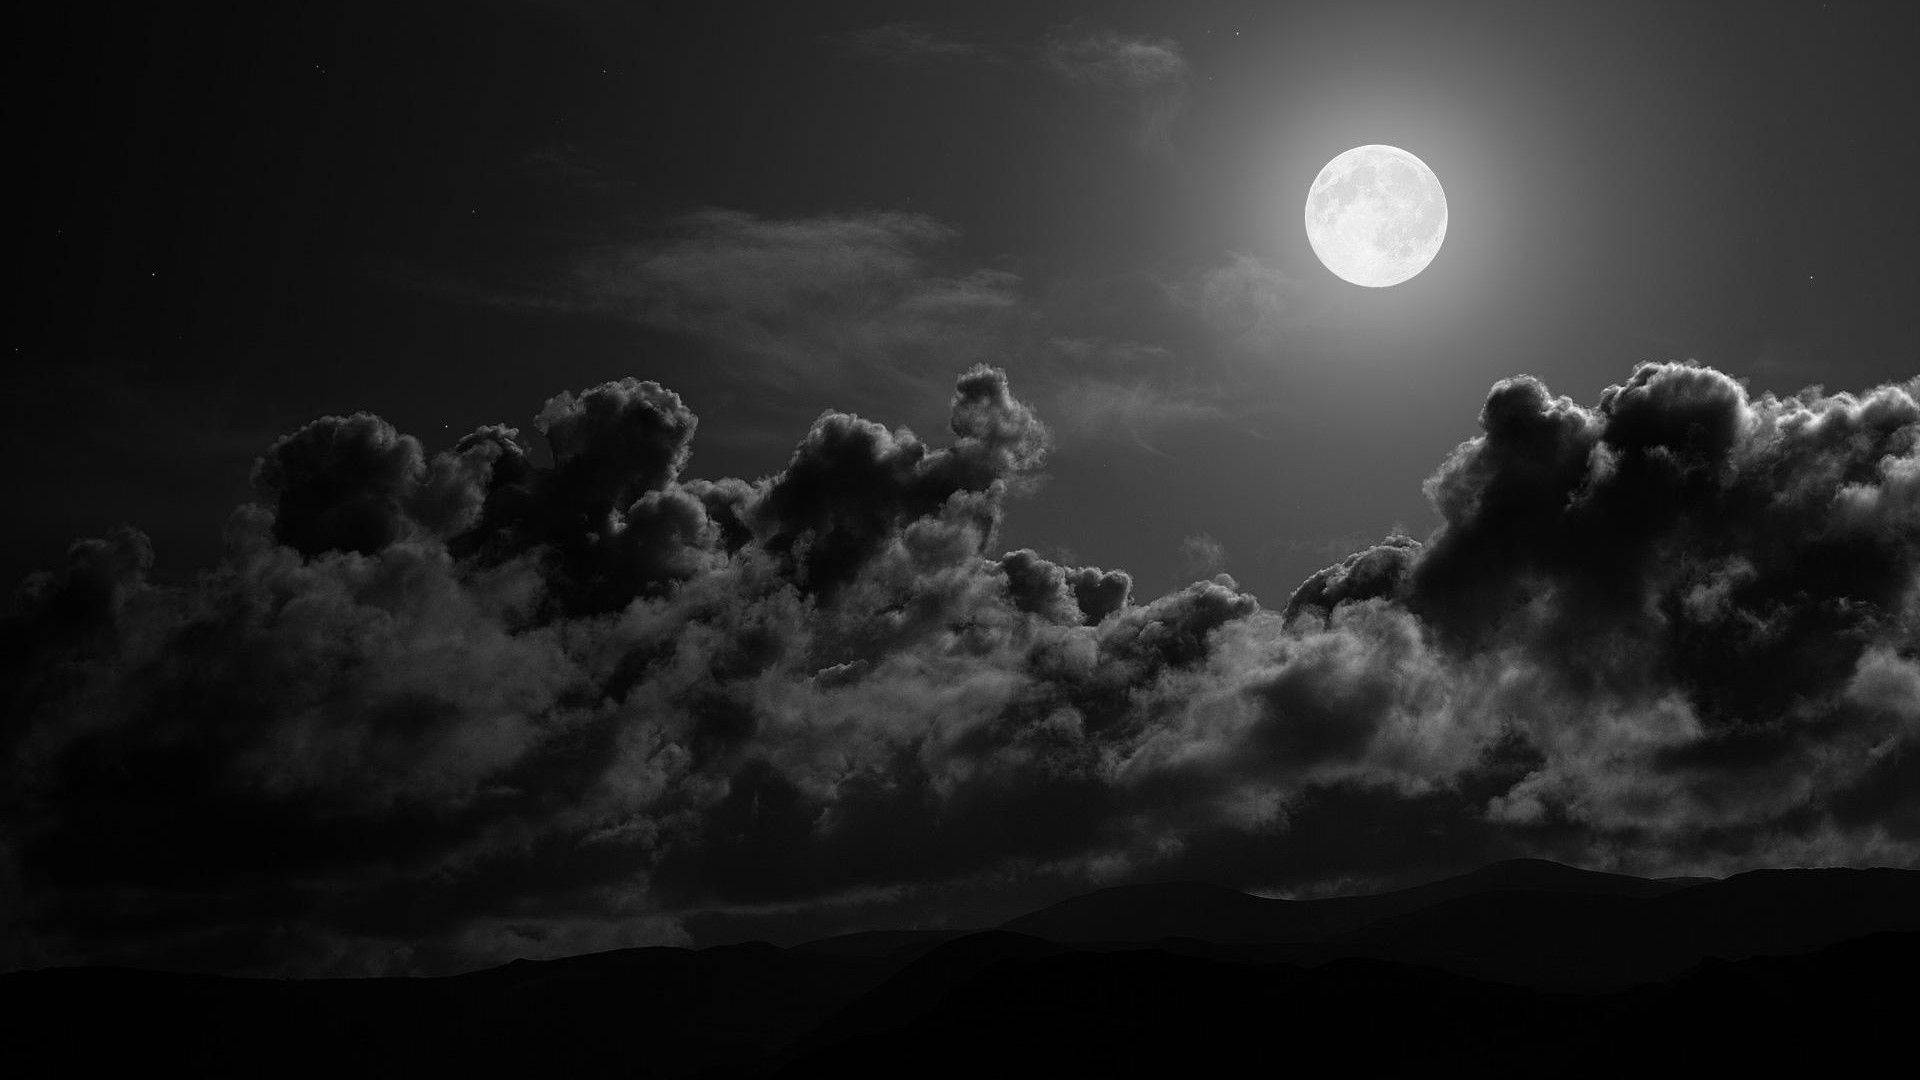 Stunning wallpaper of full moon illuminating the black night. 